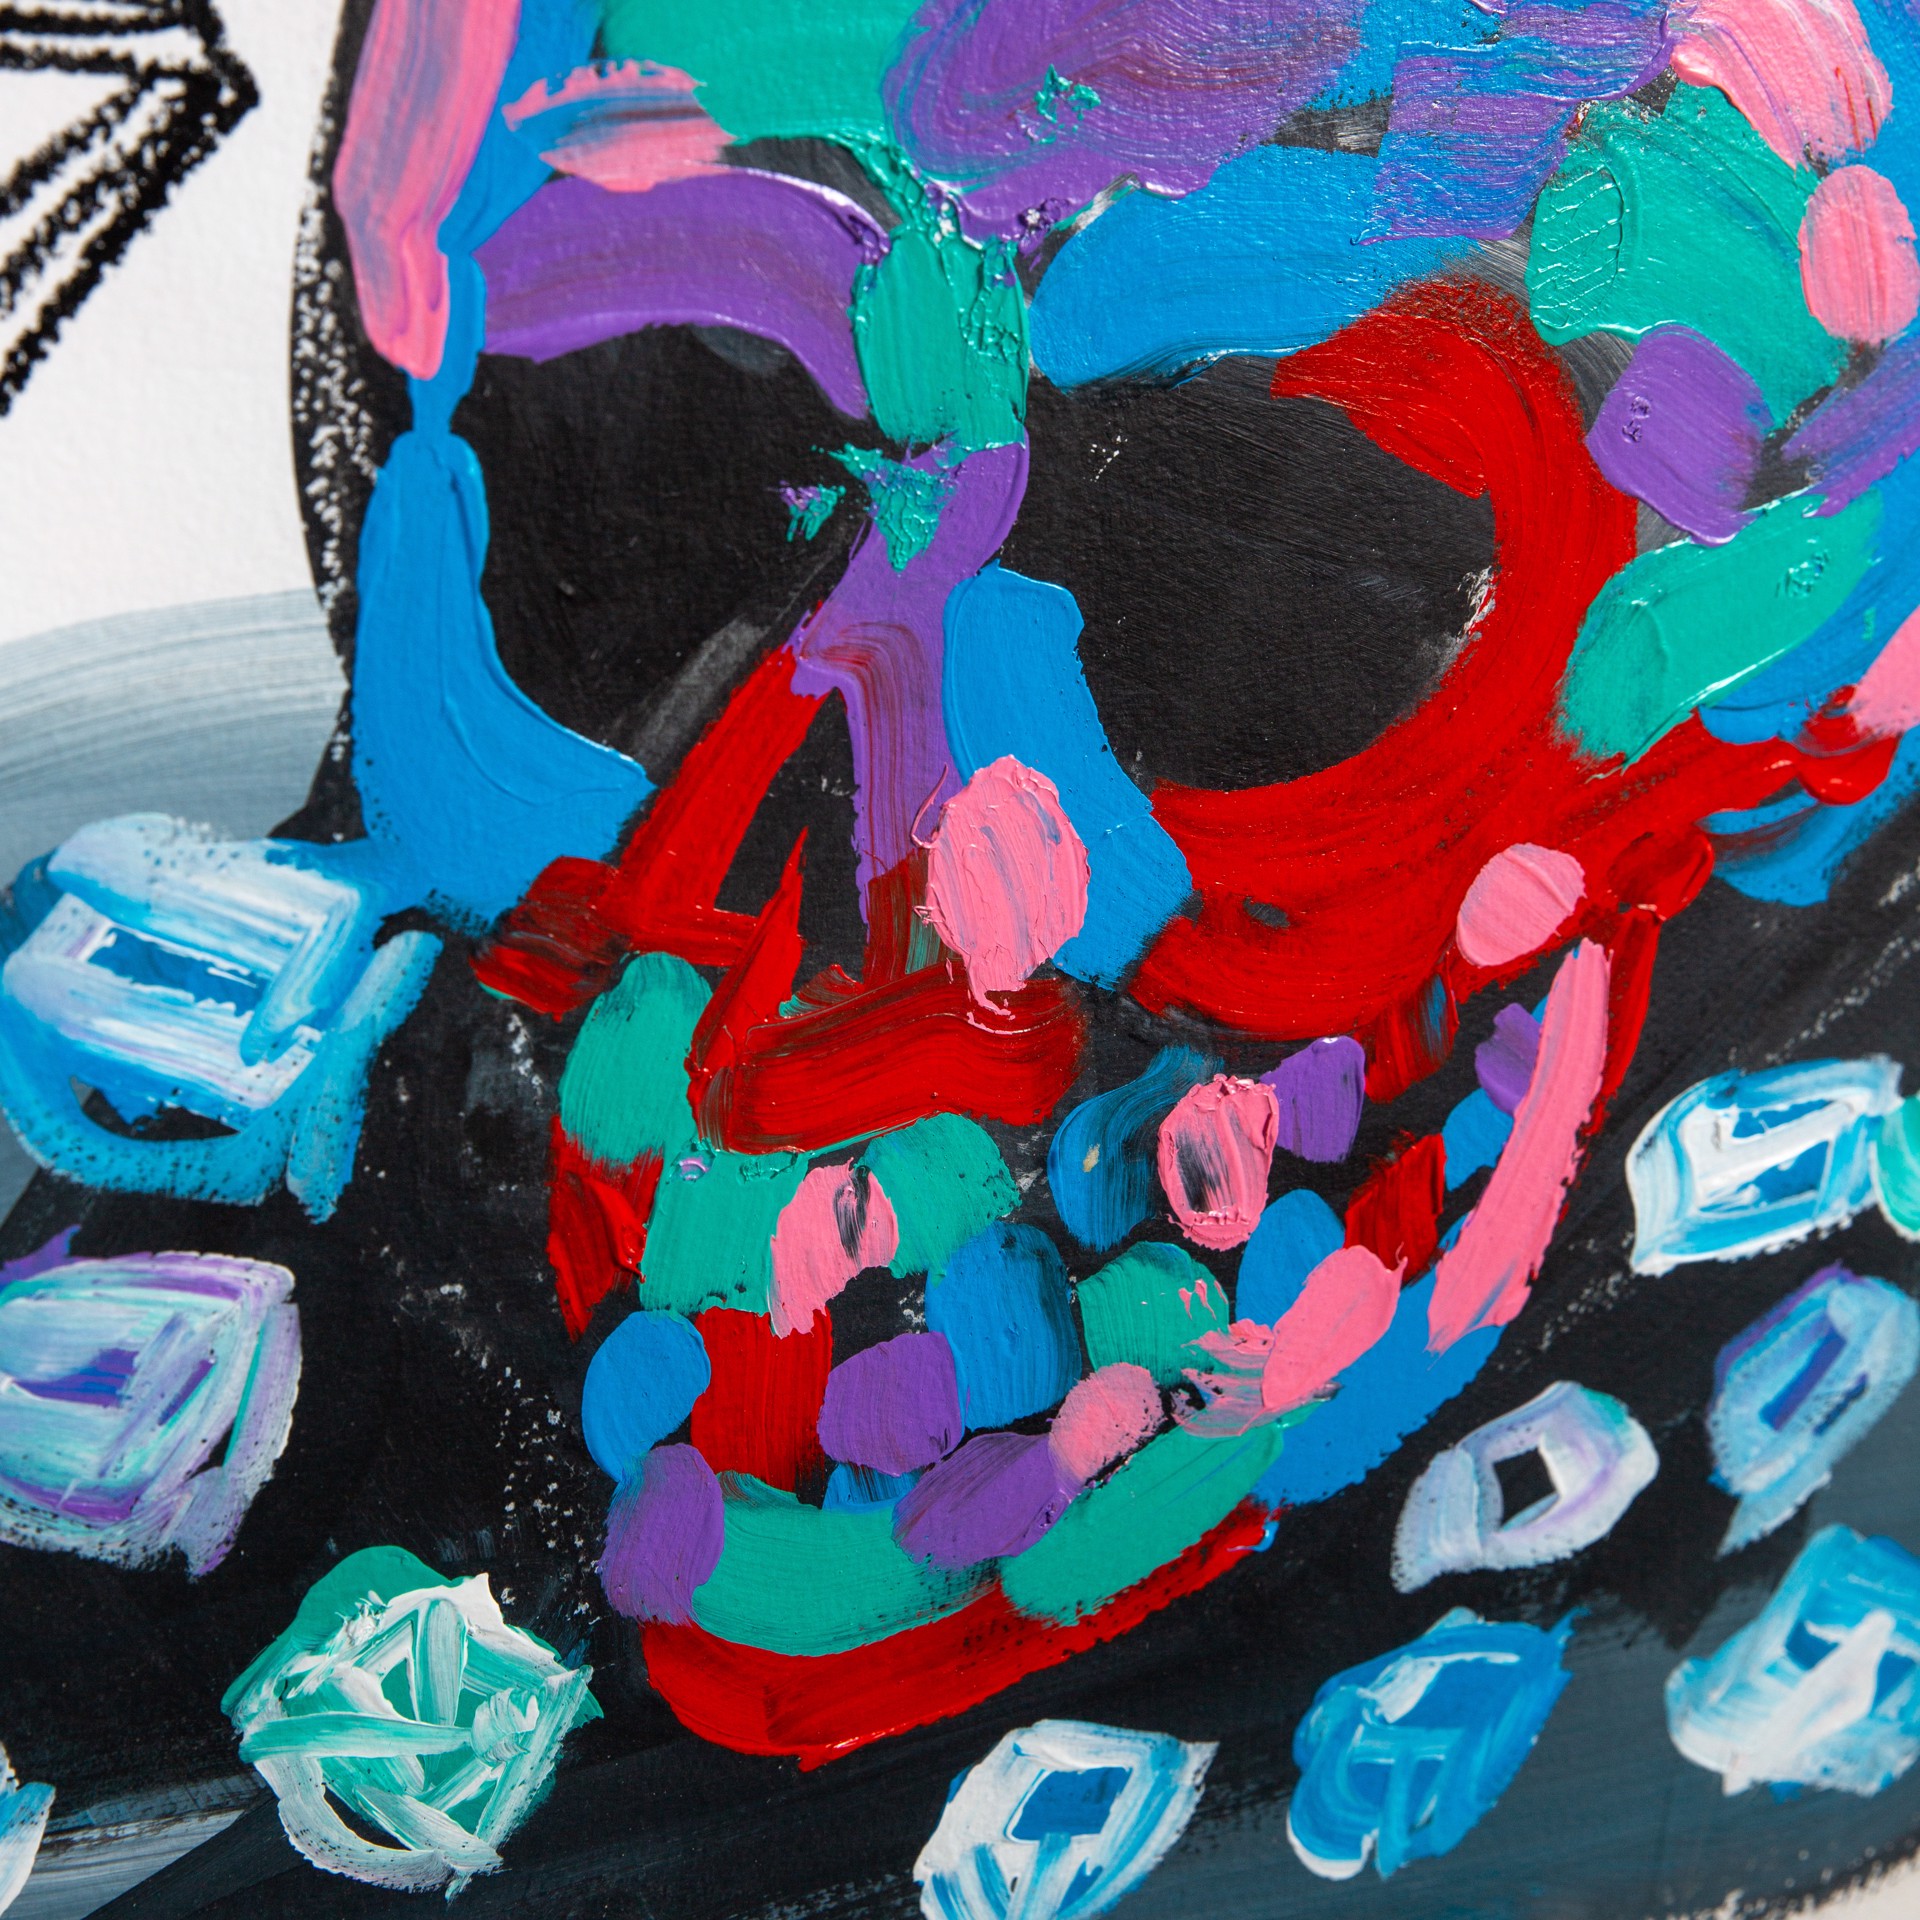 Diamond Skull II by Bradley Theodore